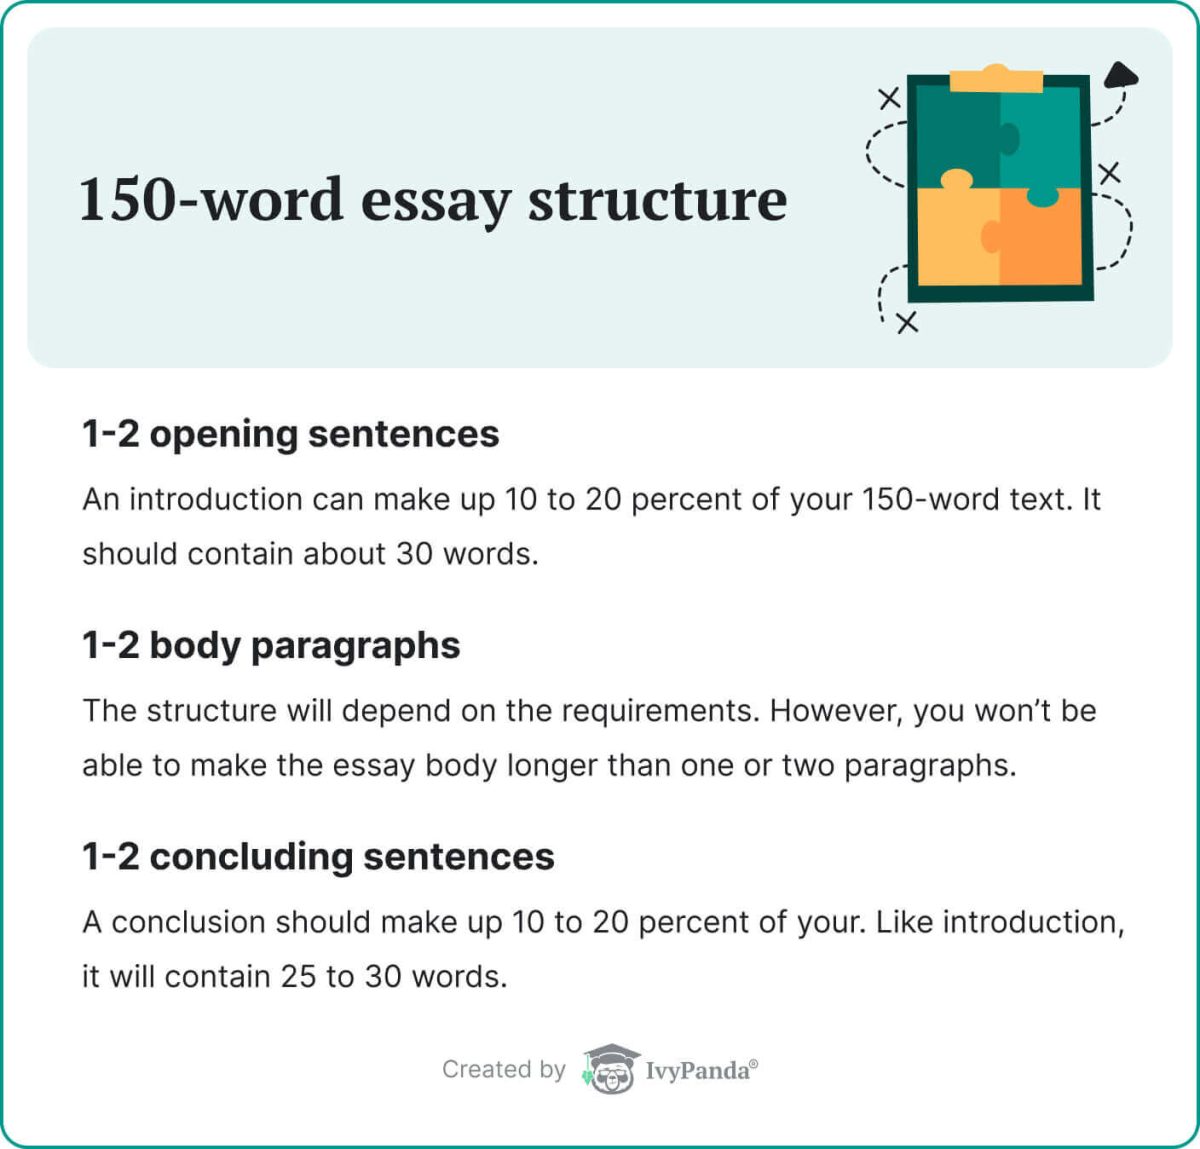 essay is 150 words